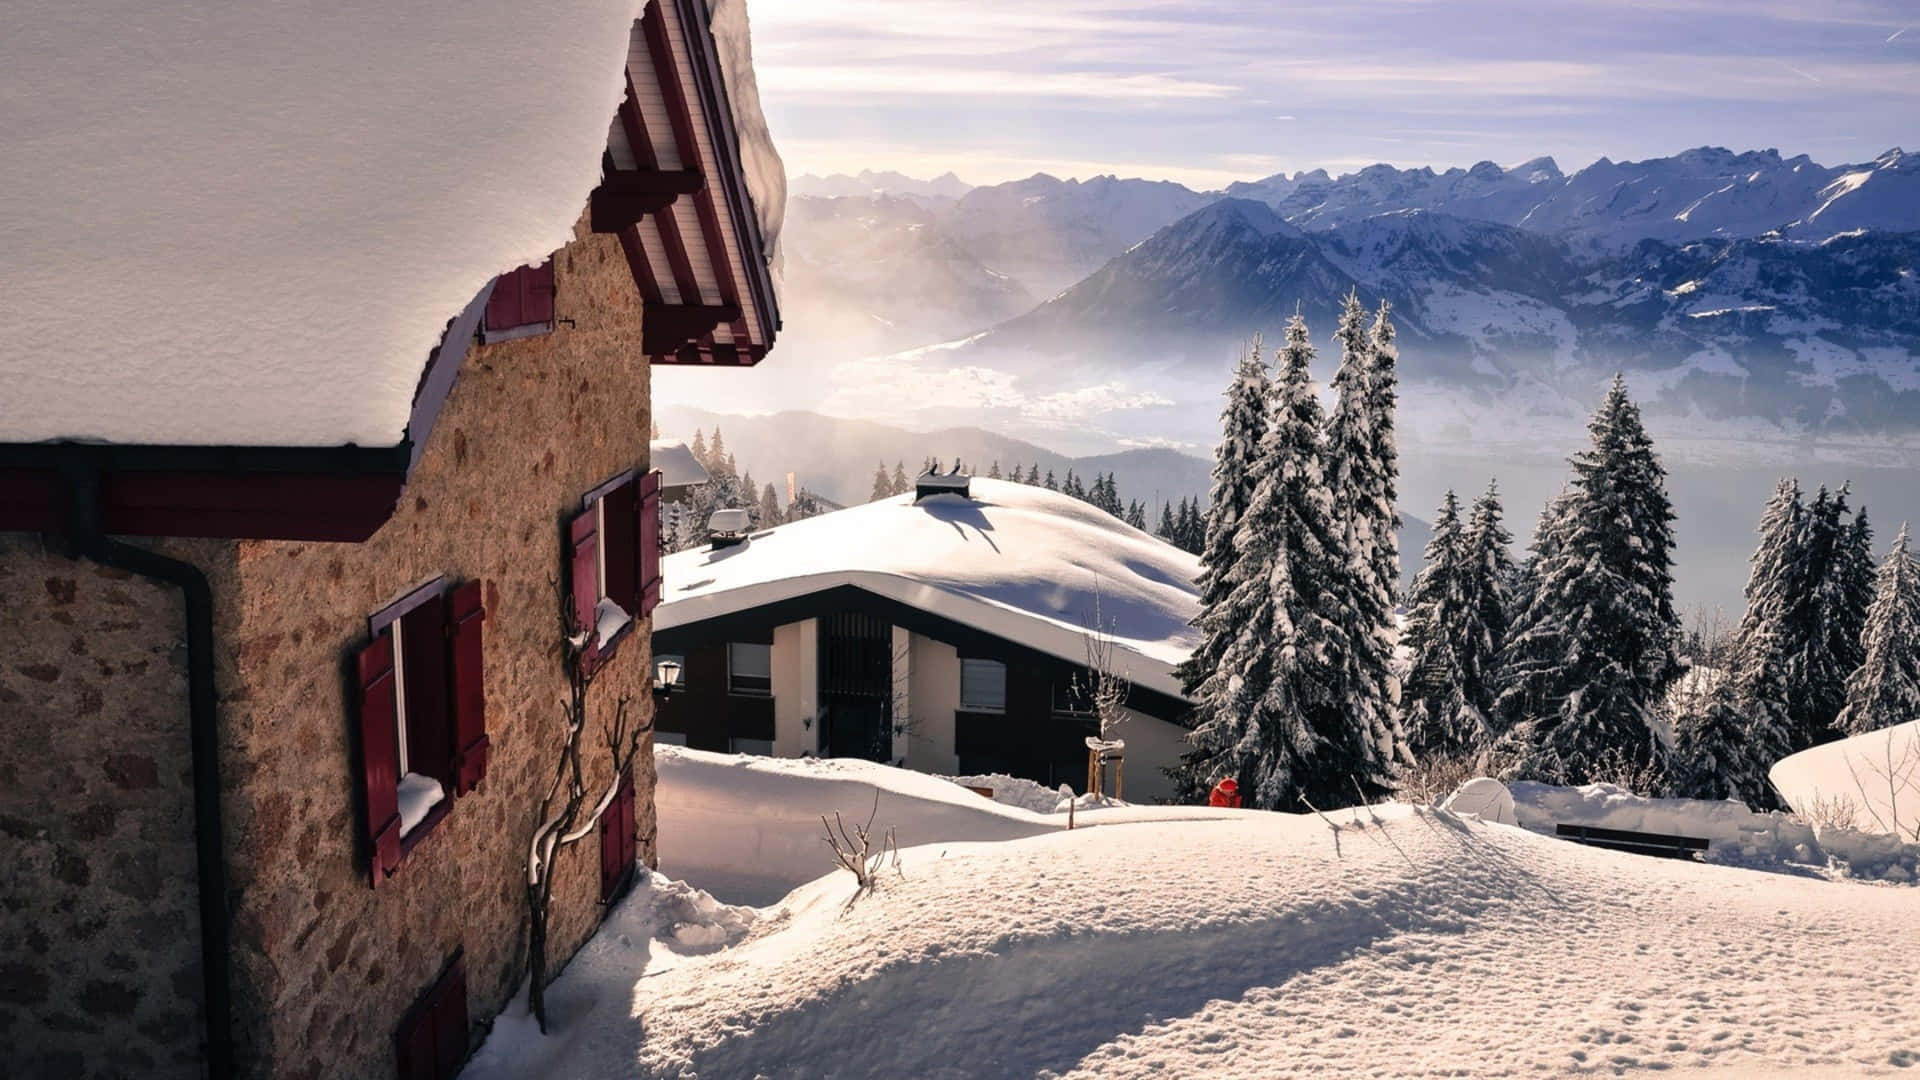 Snowy Village 3840 X 2160 Wallpaper Wallpaper